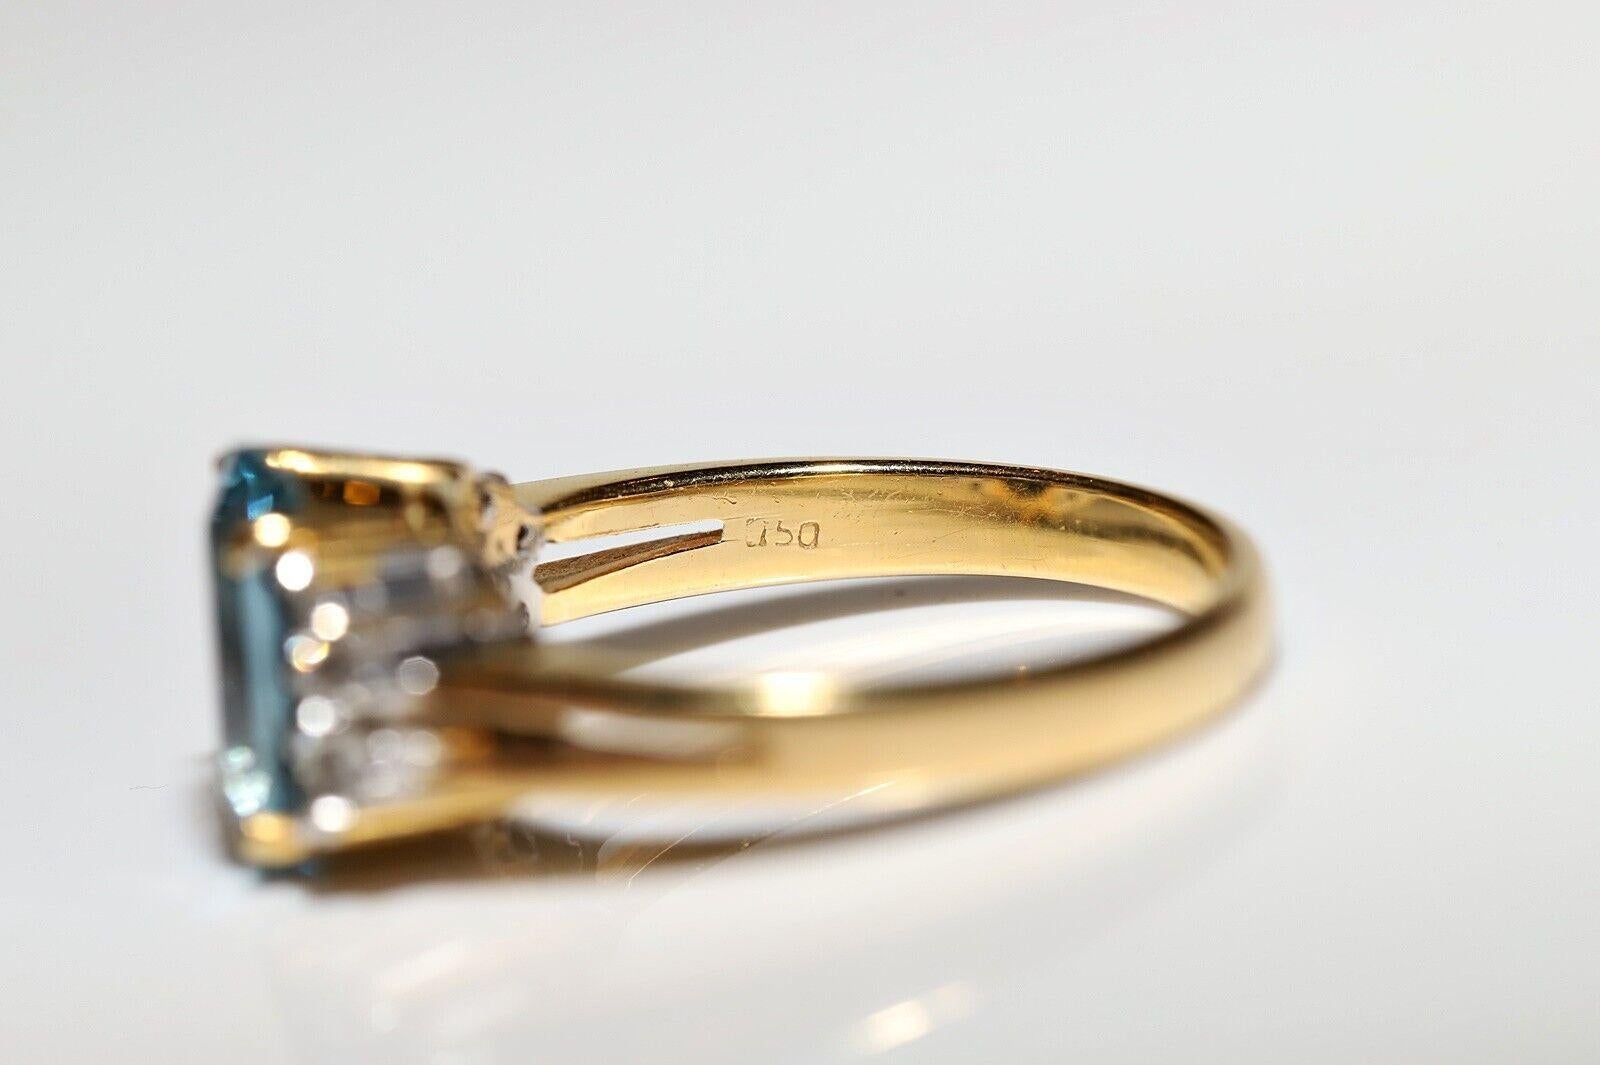 Brilliant Cut Vintage Original 18k Gold Natural Diamond And Aquamarine Decorated Ring For Sale